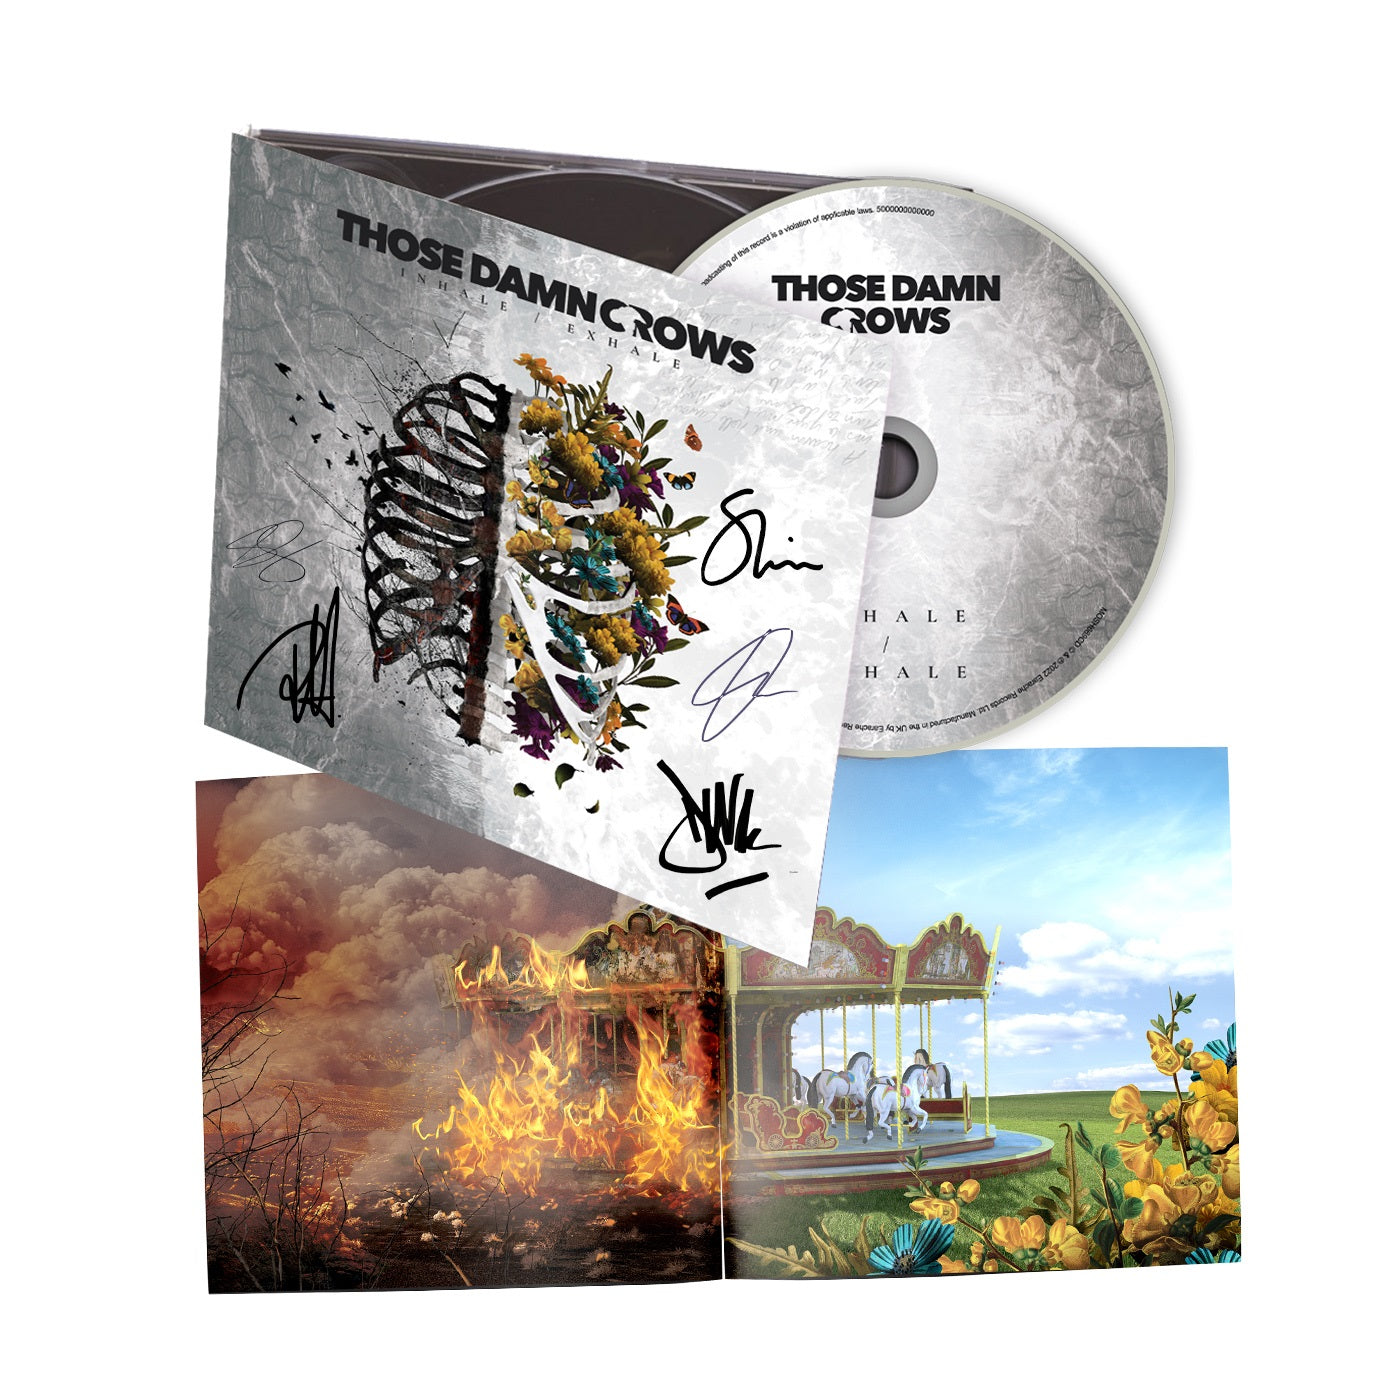 Those Damn Crows "Inhale/Exhale" Signed Digipak CD w/ 2 Bonus Tracks & Download